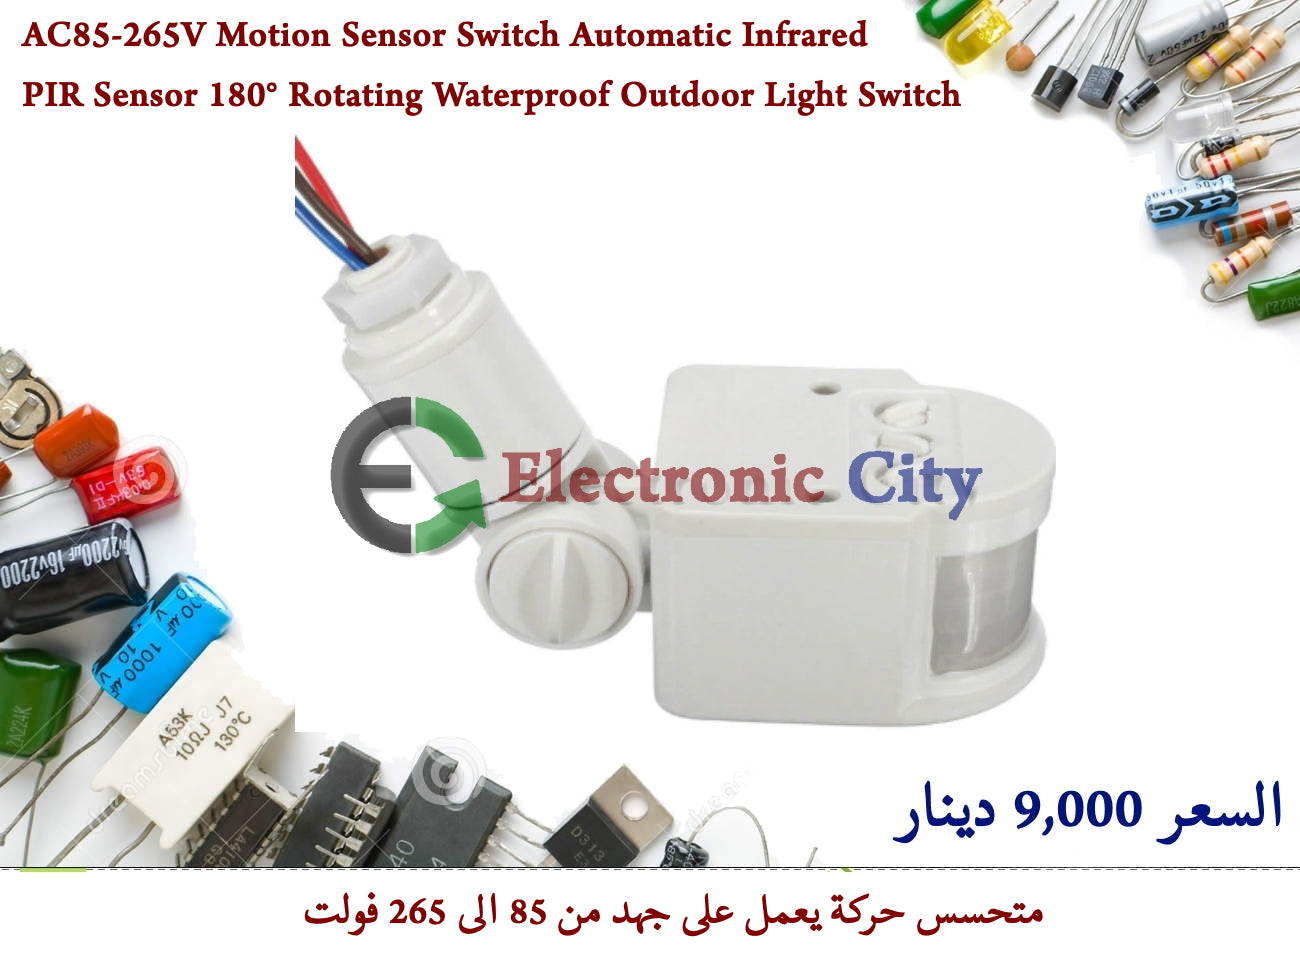 AC85-265V Motion Sensor Switch Automatic Infrared PIR Sensor 180° Rotating Waterproof Outdoor Light Switch #J8 XB0058-02